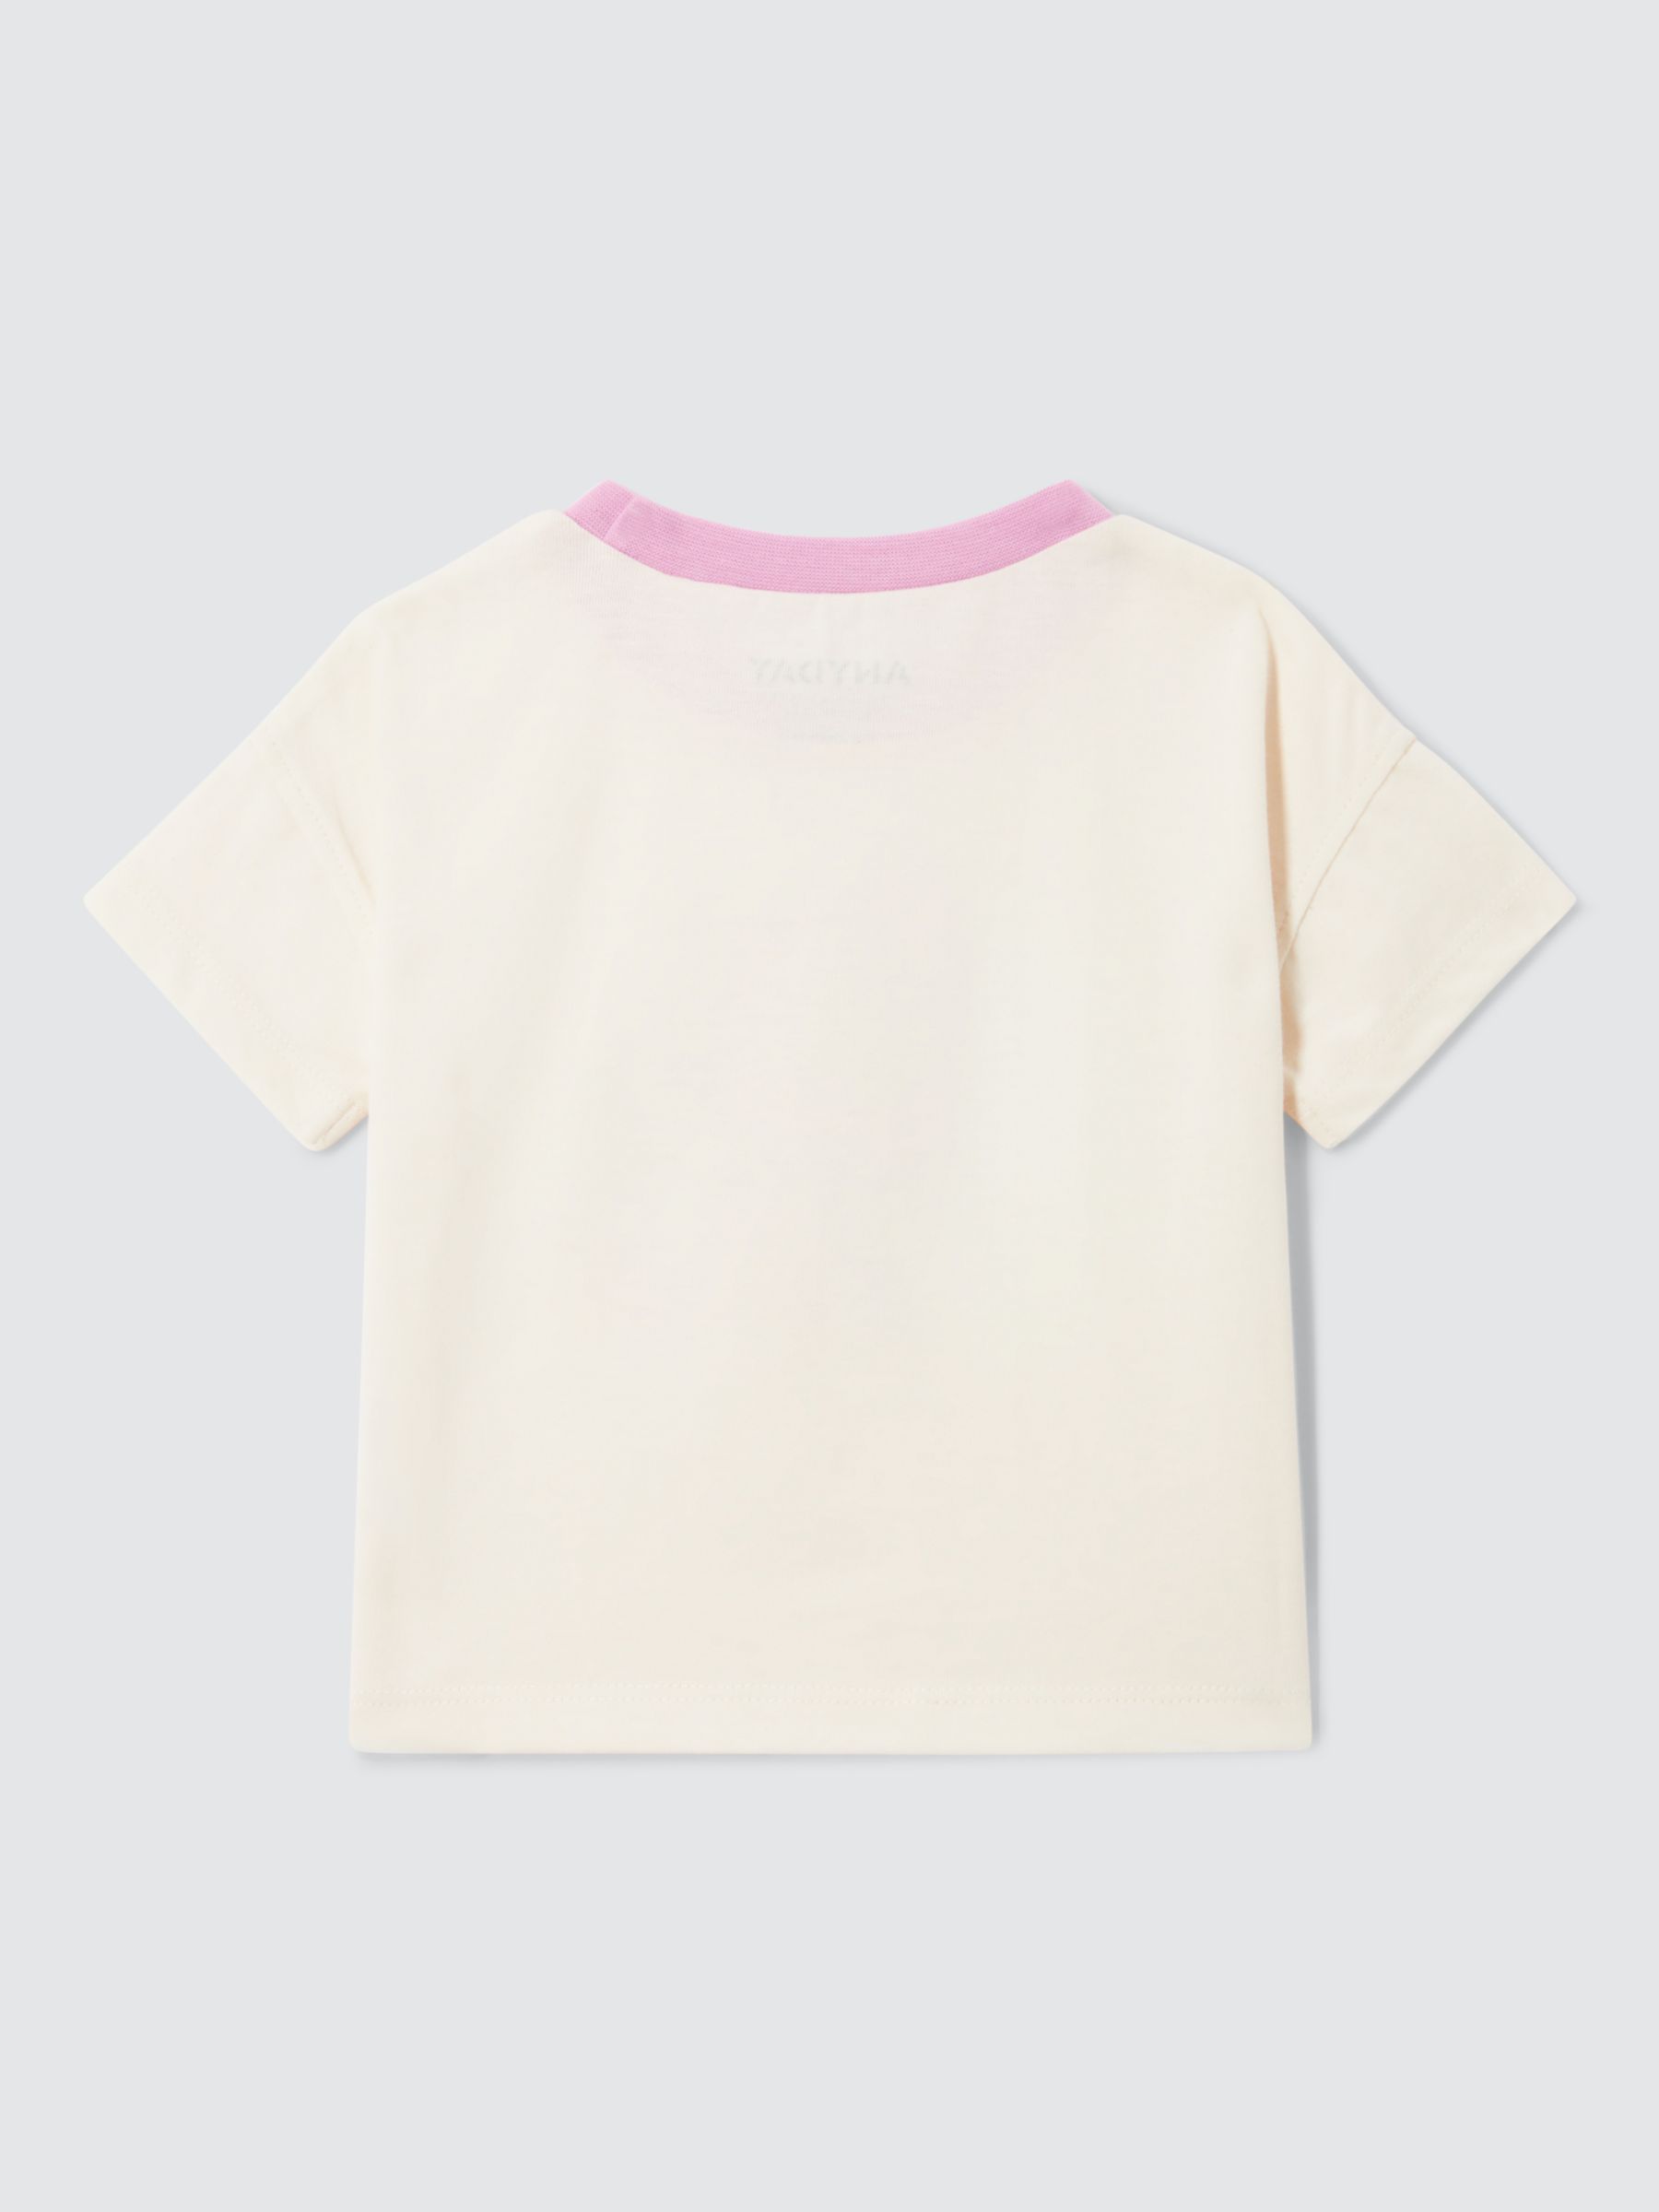 John Lewis ANYDAY Baby Smile T-Shirt, Pink/Multi, 6-9 months